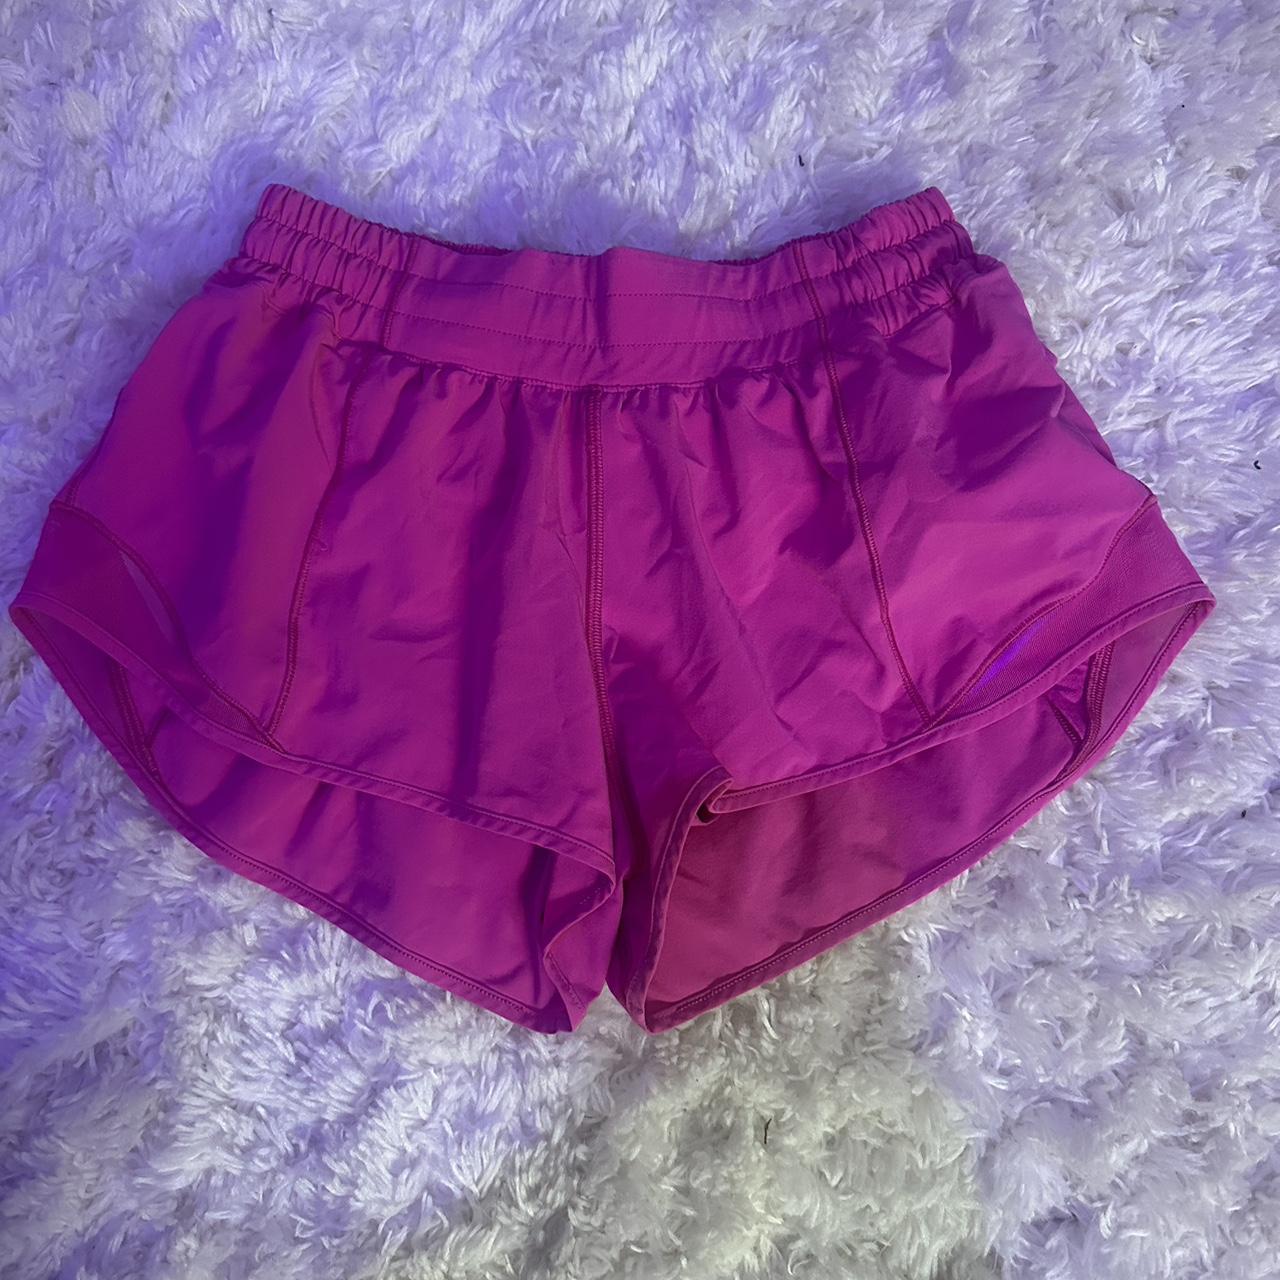 sonic pink lululemon hotty hot shorts 2.5in - Depop